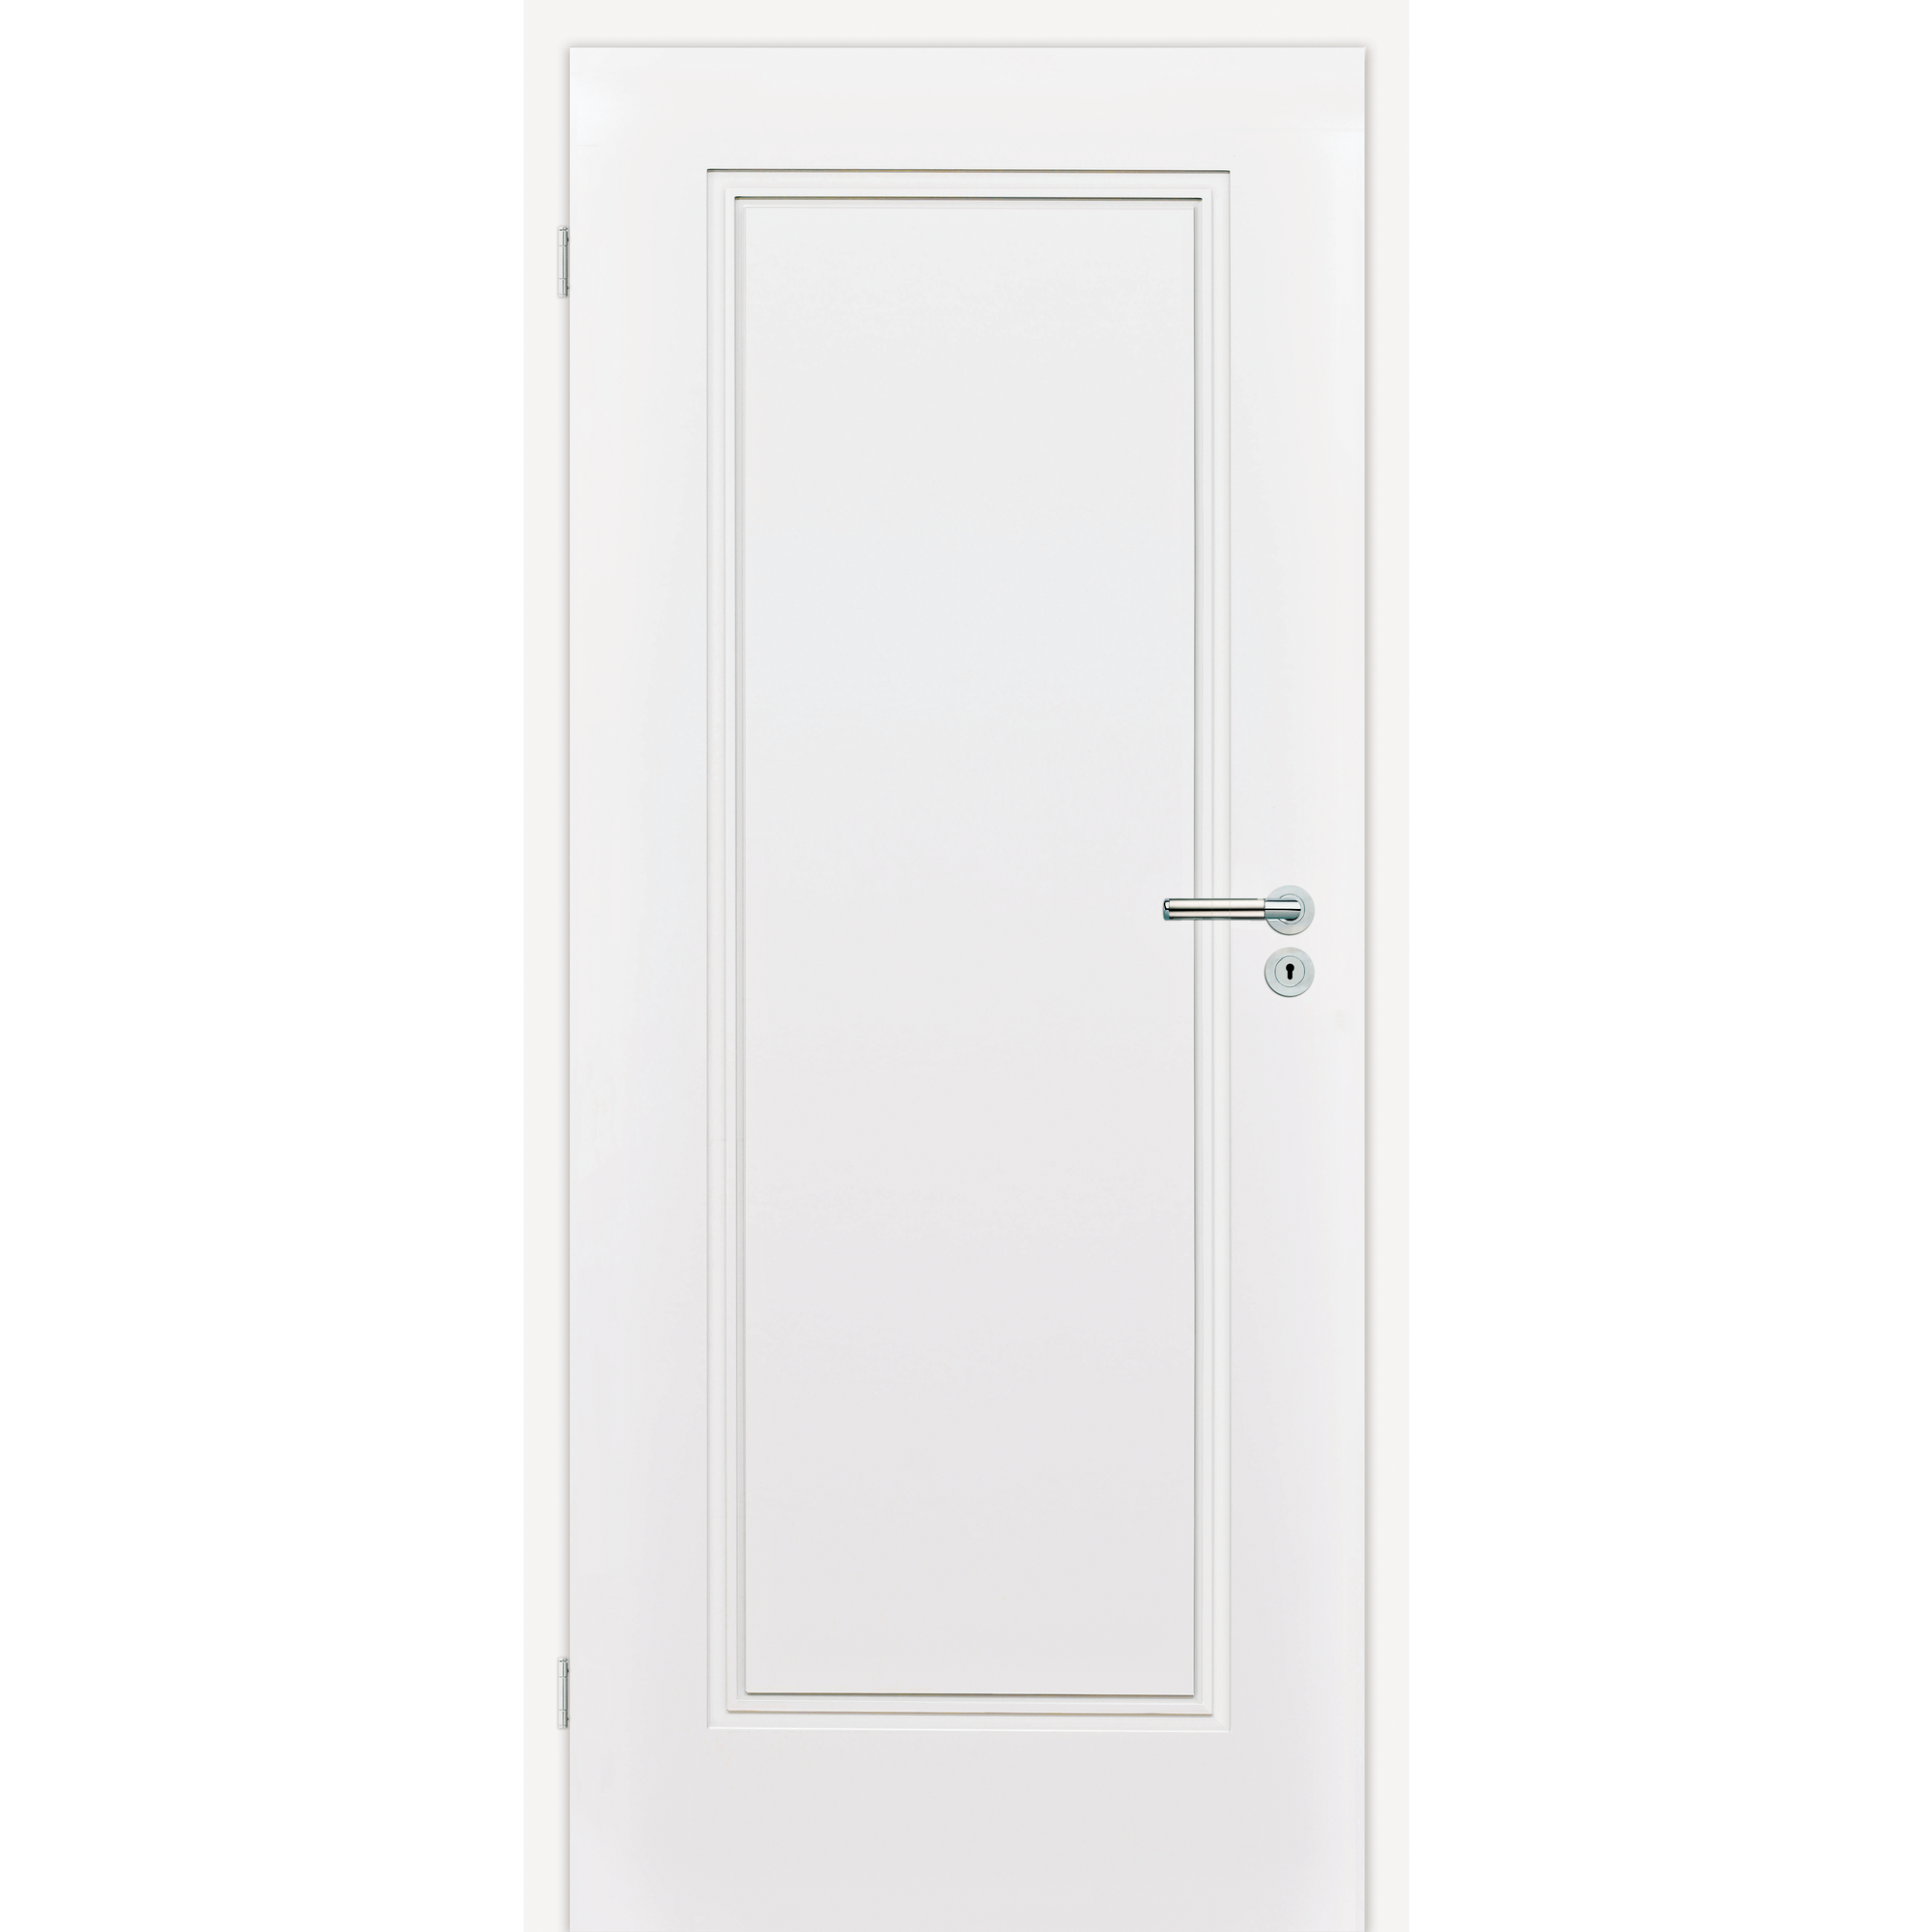 Innentür 'Linea 1.4' weiß 198,5 x 86 cm, Linksanschlag + product picture